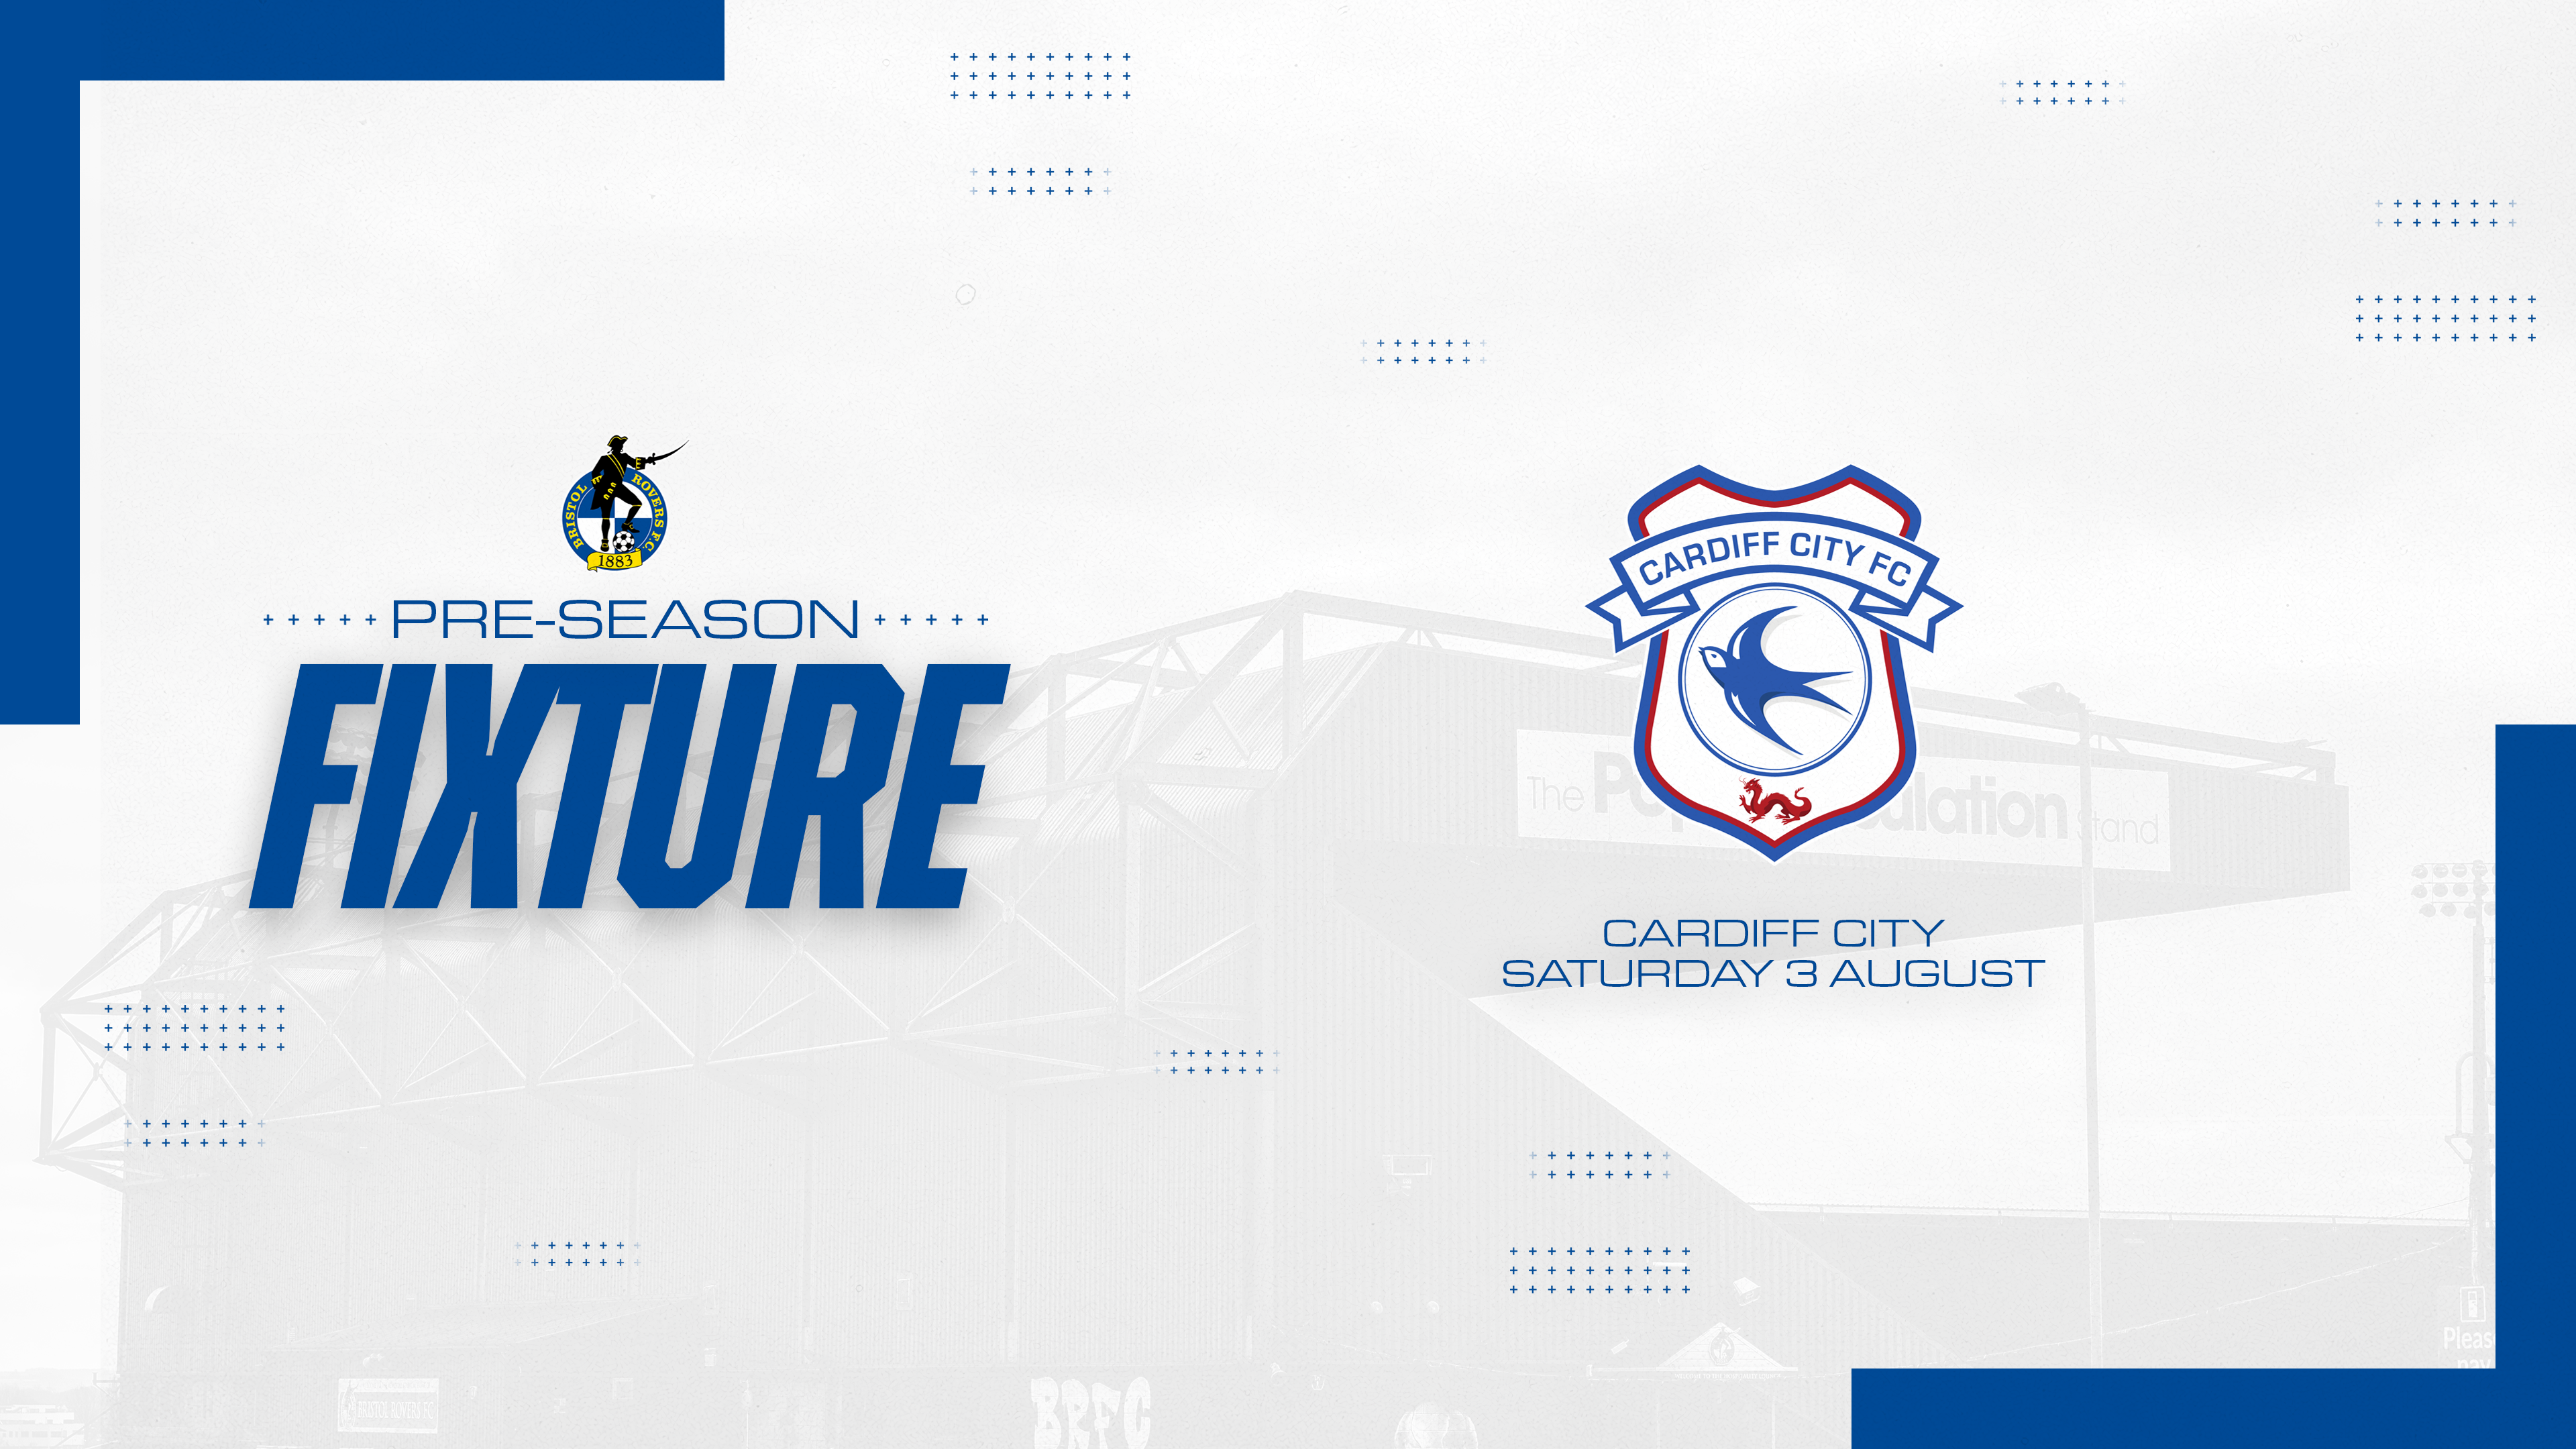 Cardiff | Pre-season fixture